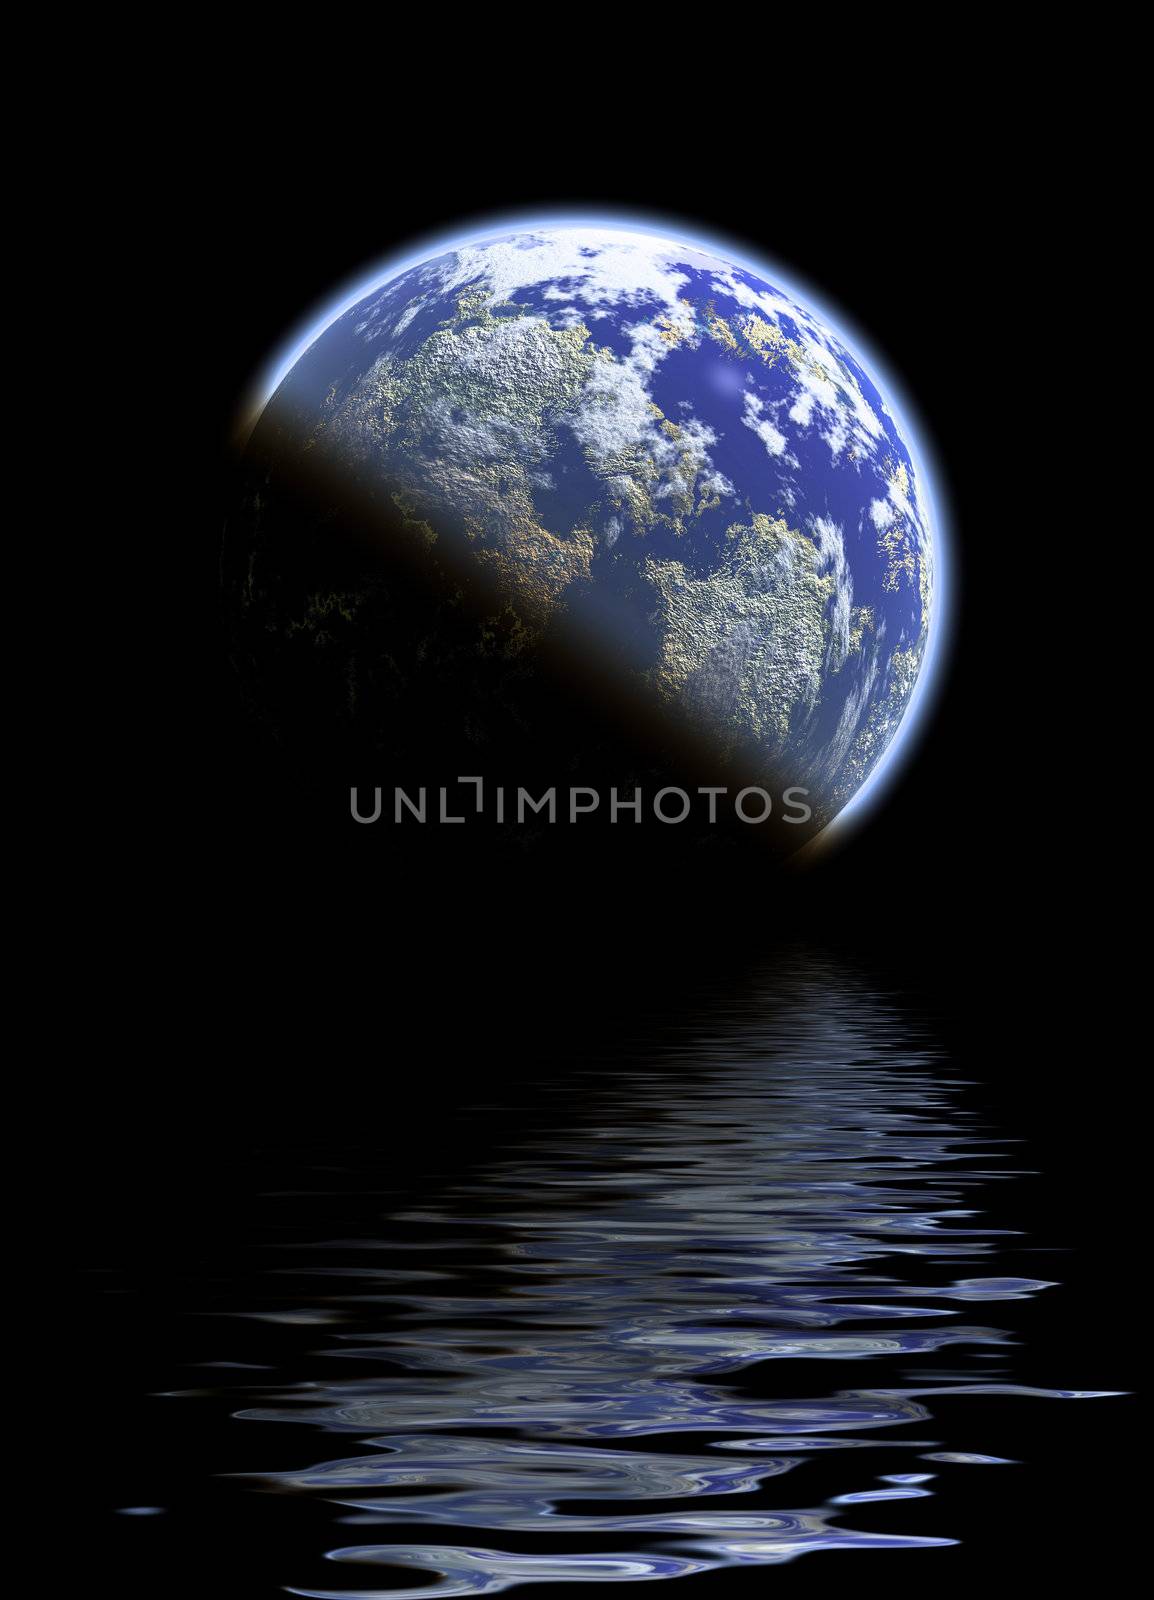 Water everywhere in this futuristic earth like scene